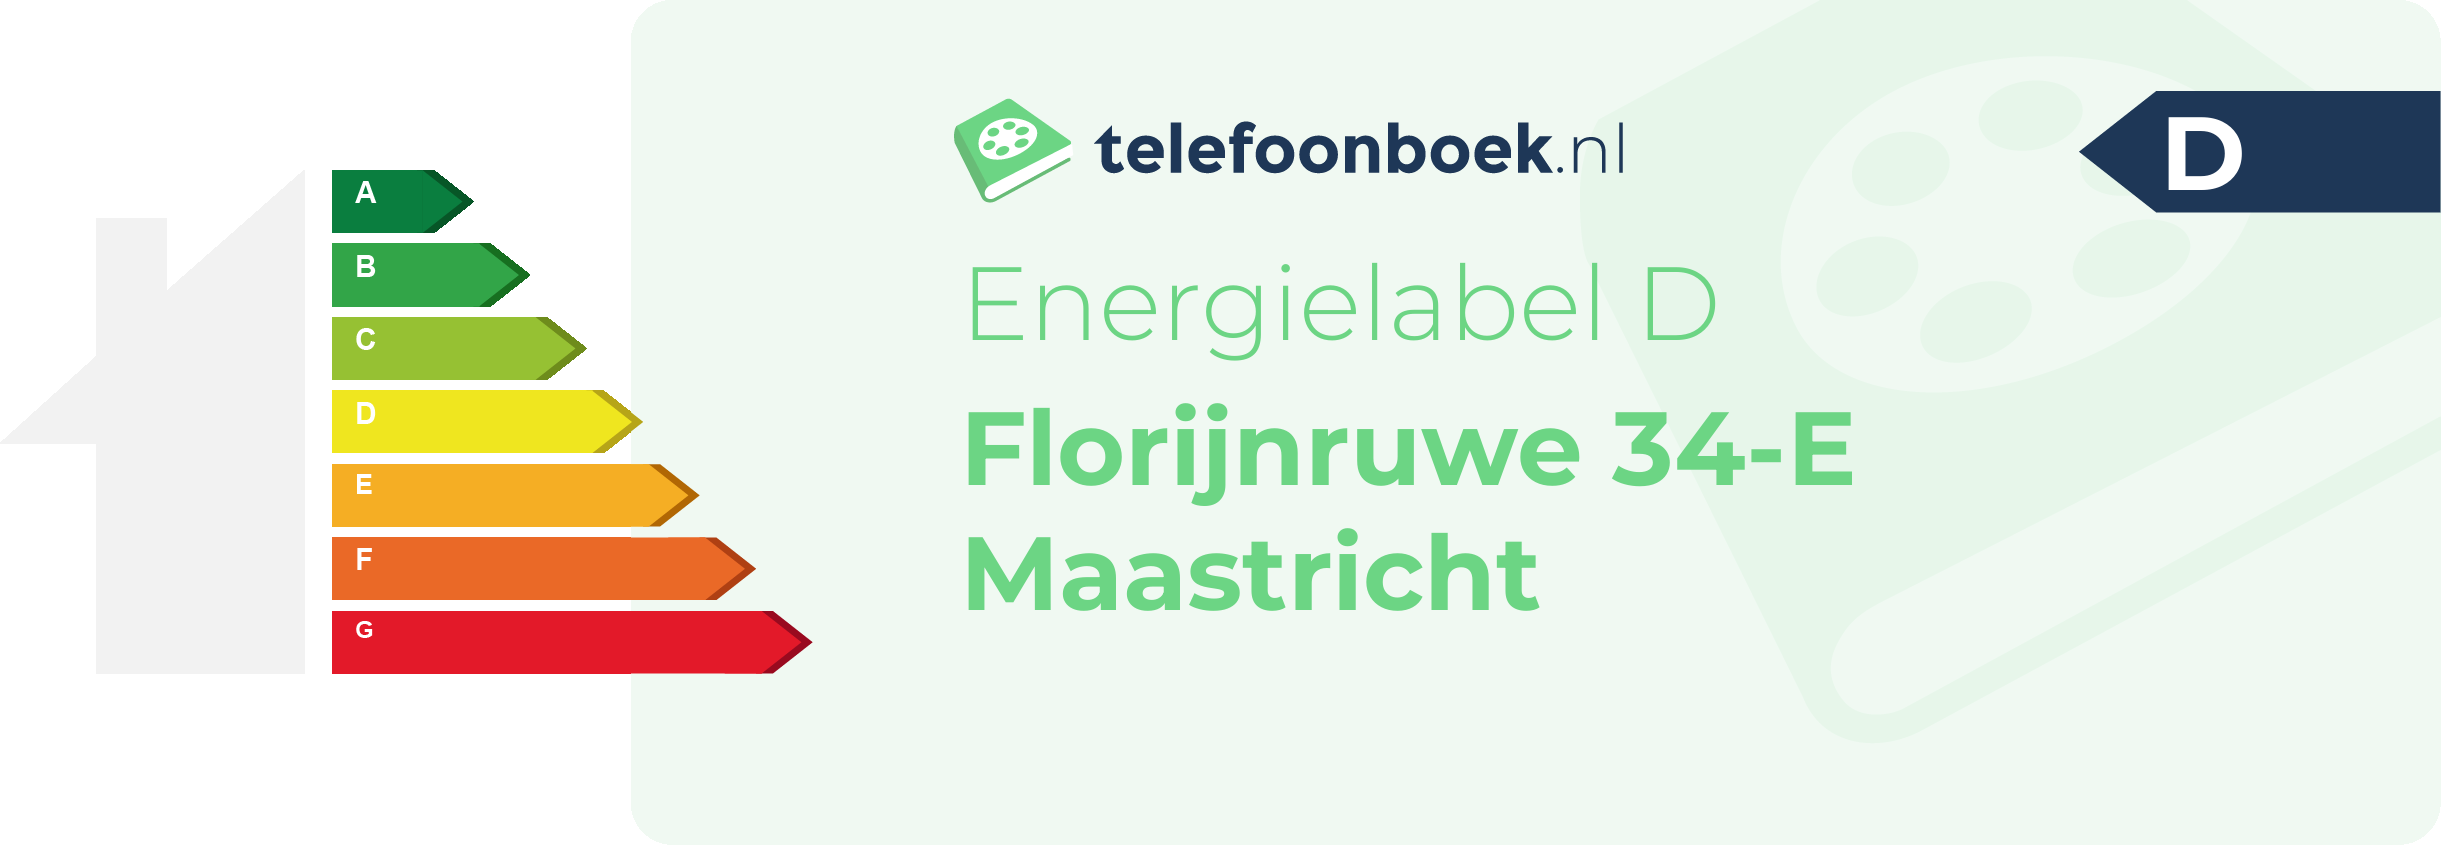 Energielabel Florijnruwe 34-E Maastricht